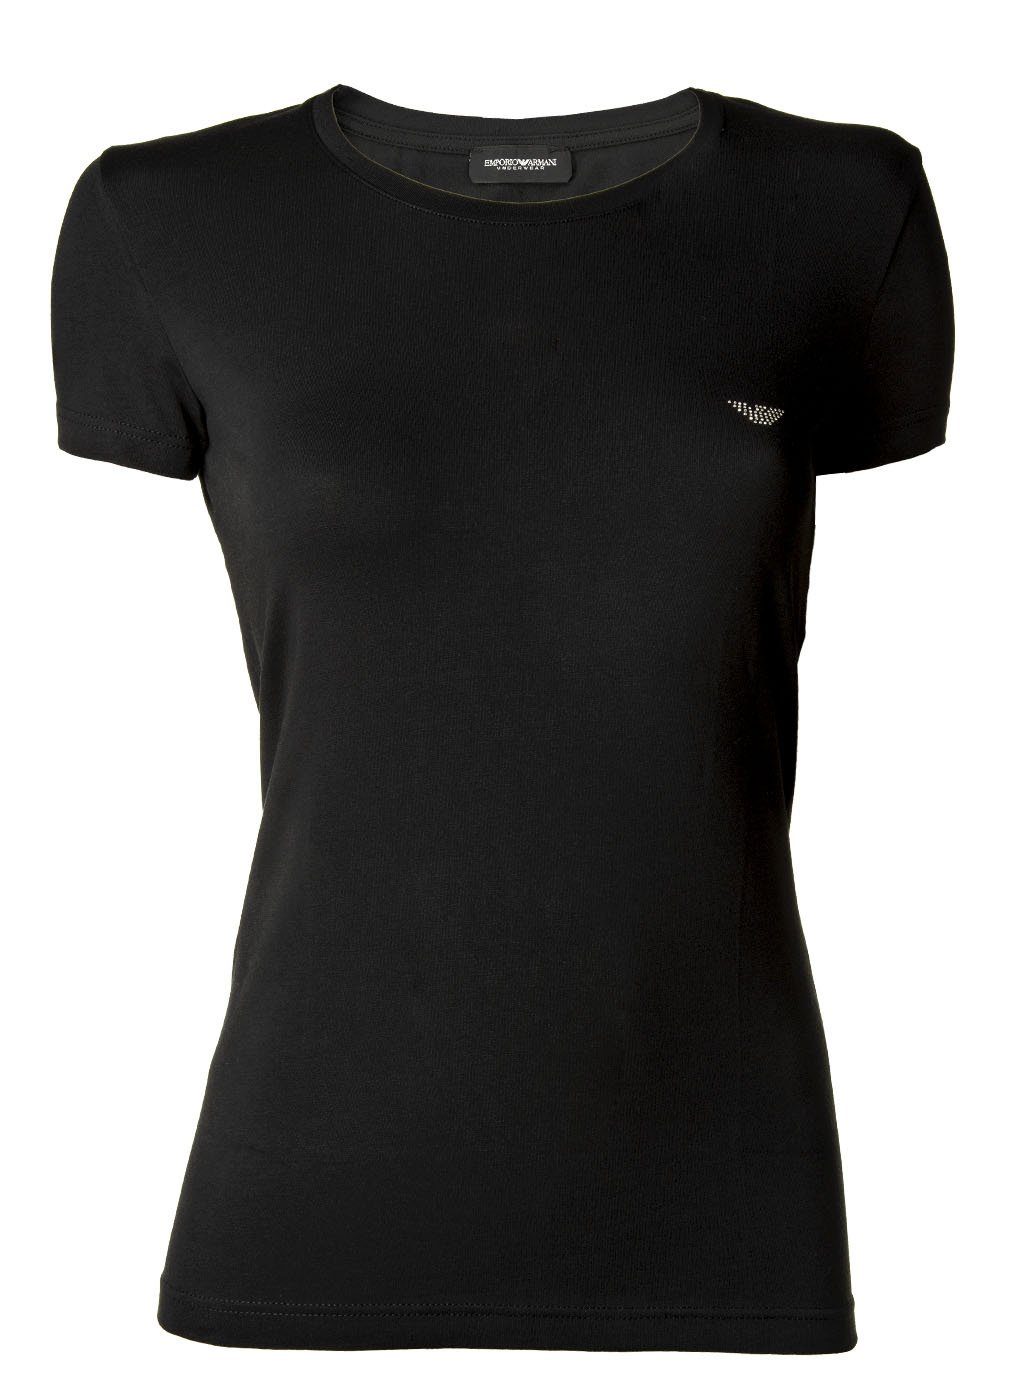 Emporio Armani T-Shirt Damen T-Shirt - Rundhals, Loungewear, Kurzarm Schwarz